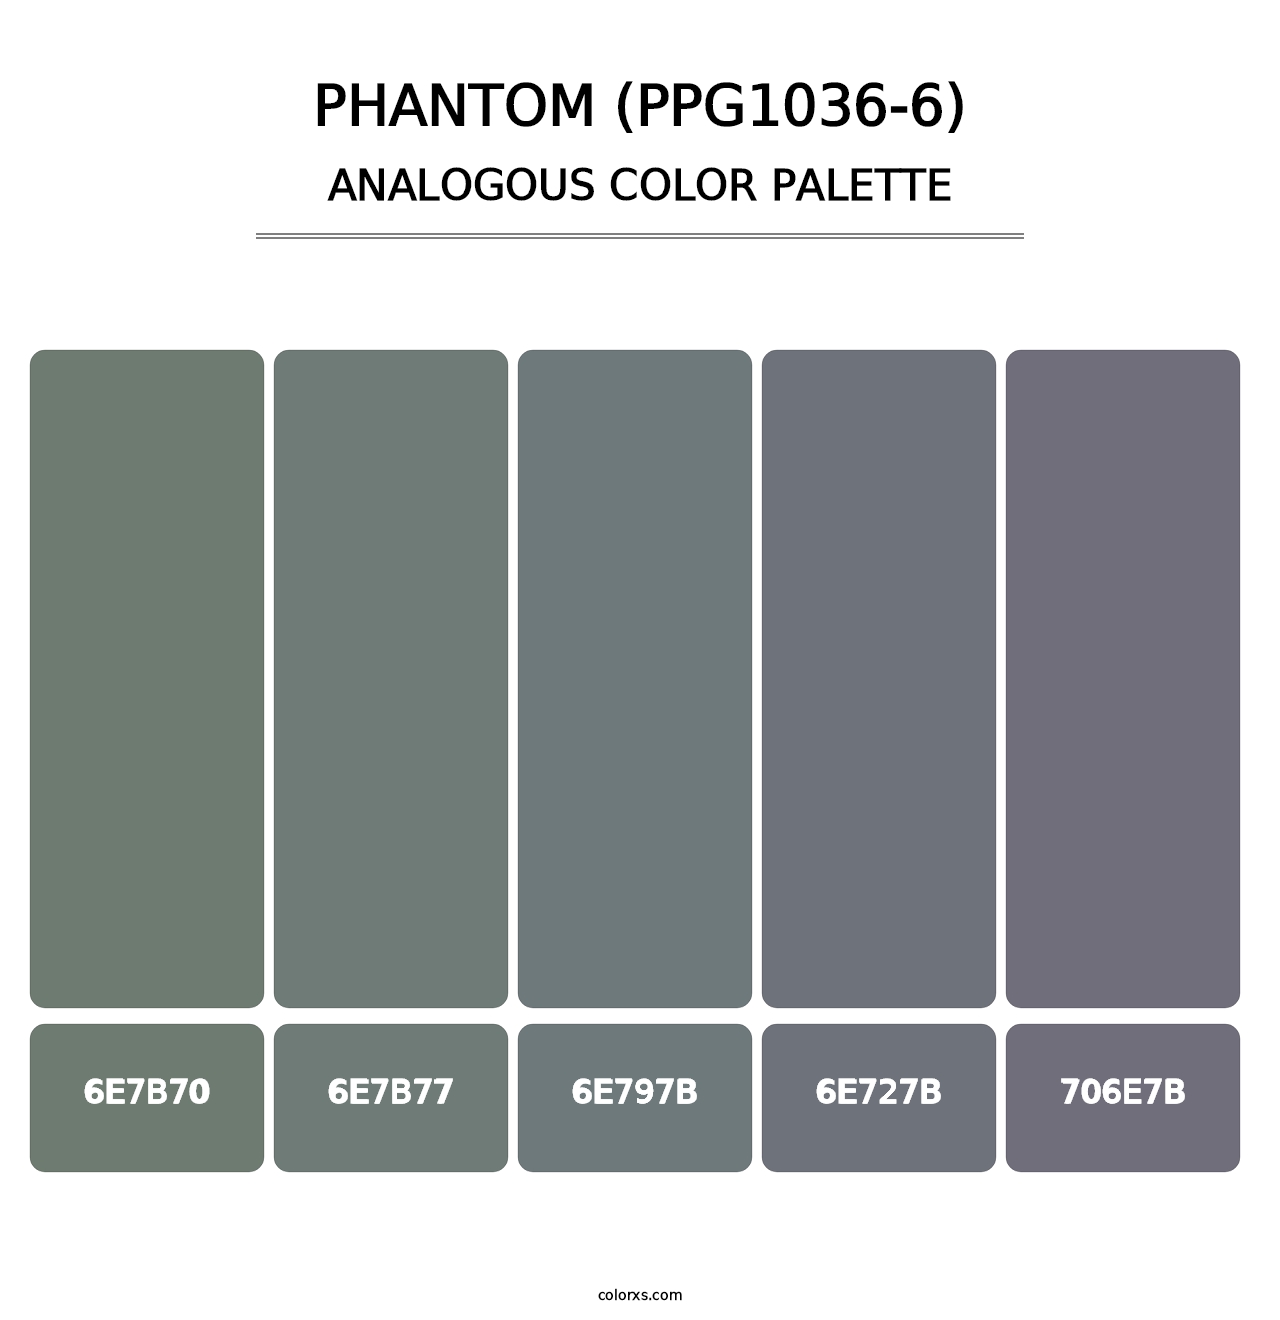 Phantom (PPG1036-6) - Analogous Color Palette